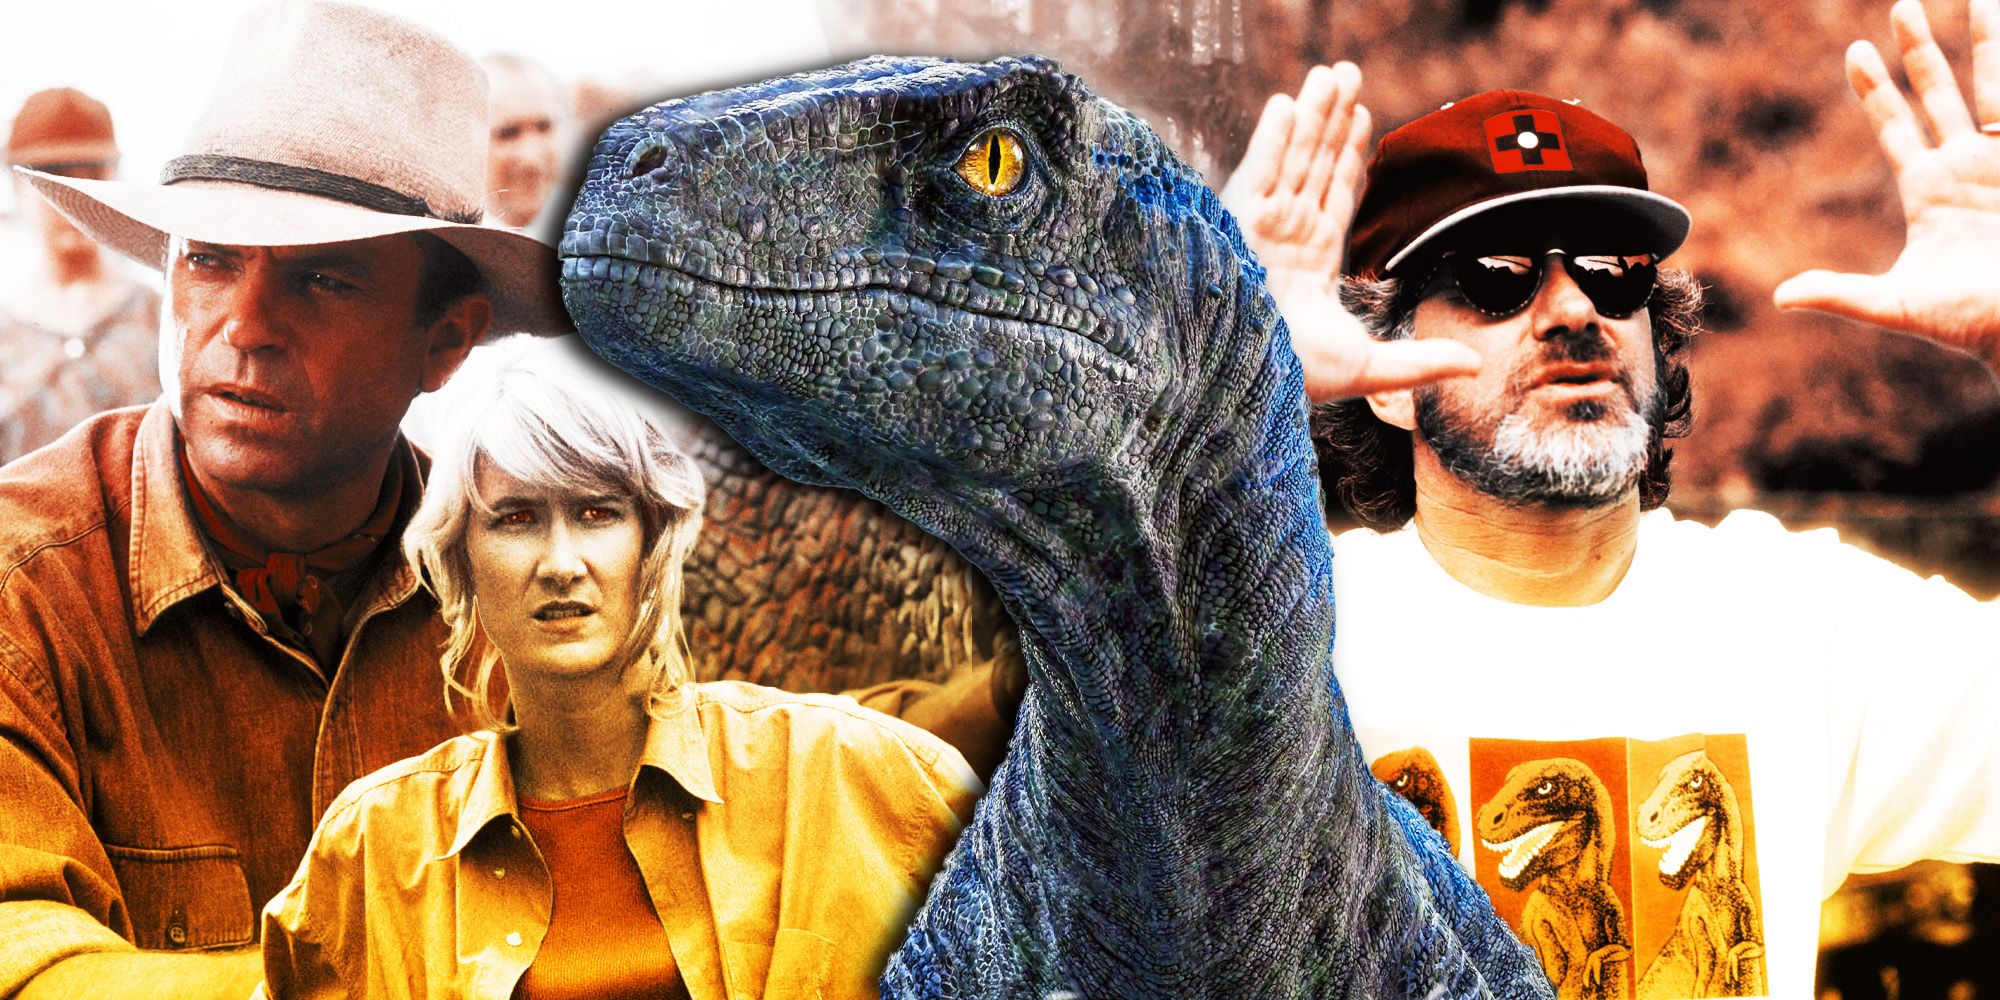 Alan Grant and Ellie Sattler from Jurassic Park, Blue from Jurassic World, and Steven Spielberg directing Jurassic Park